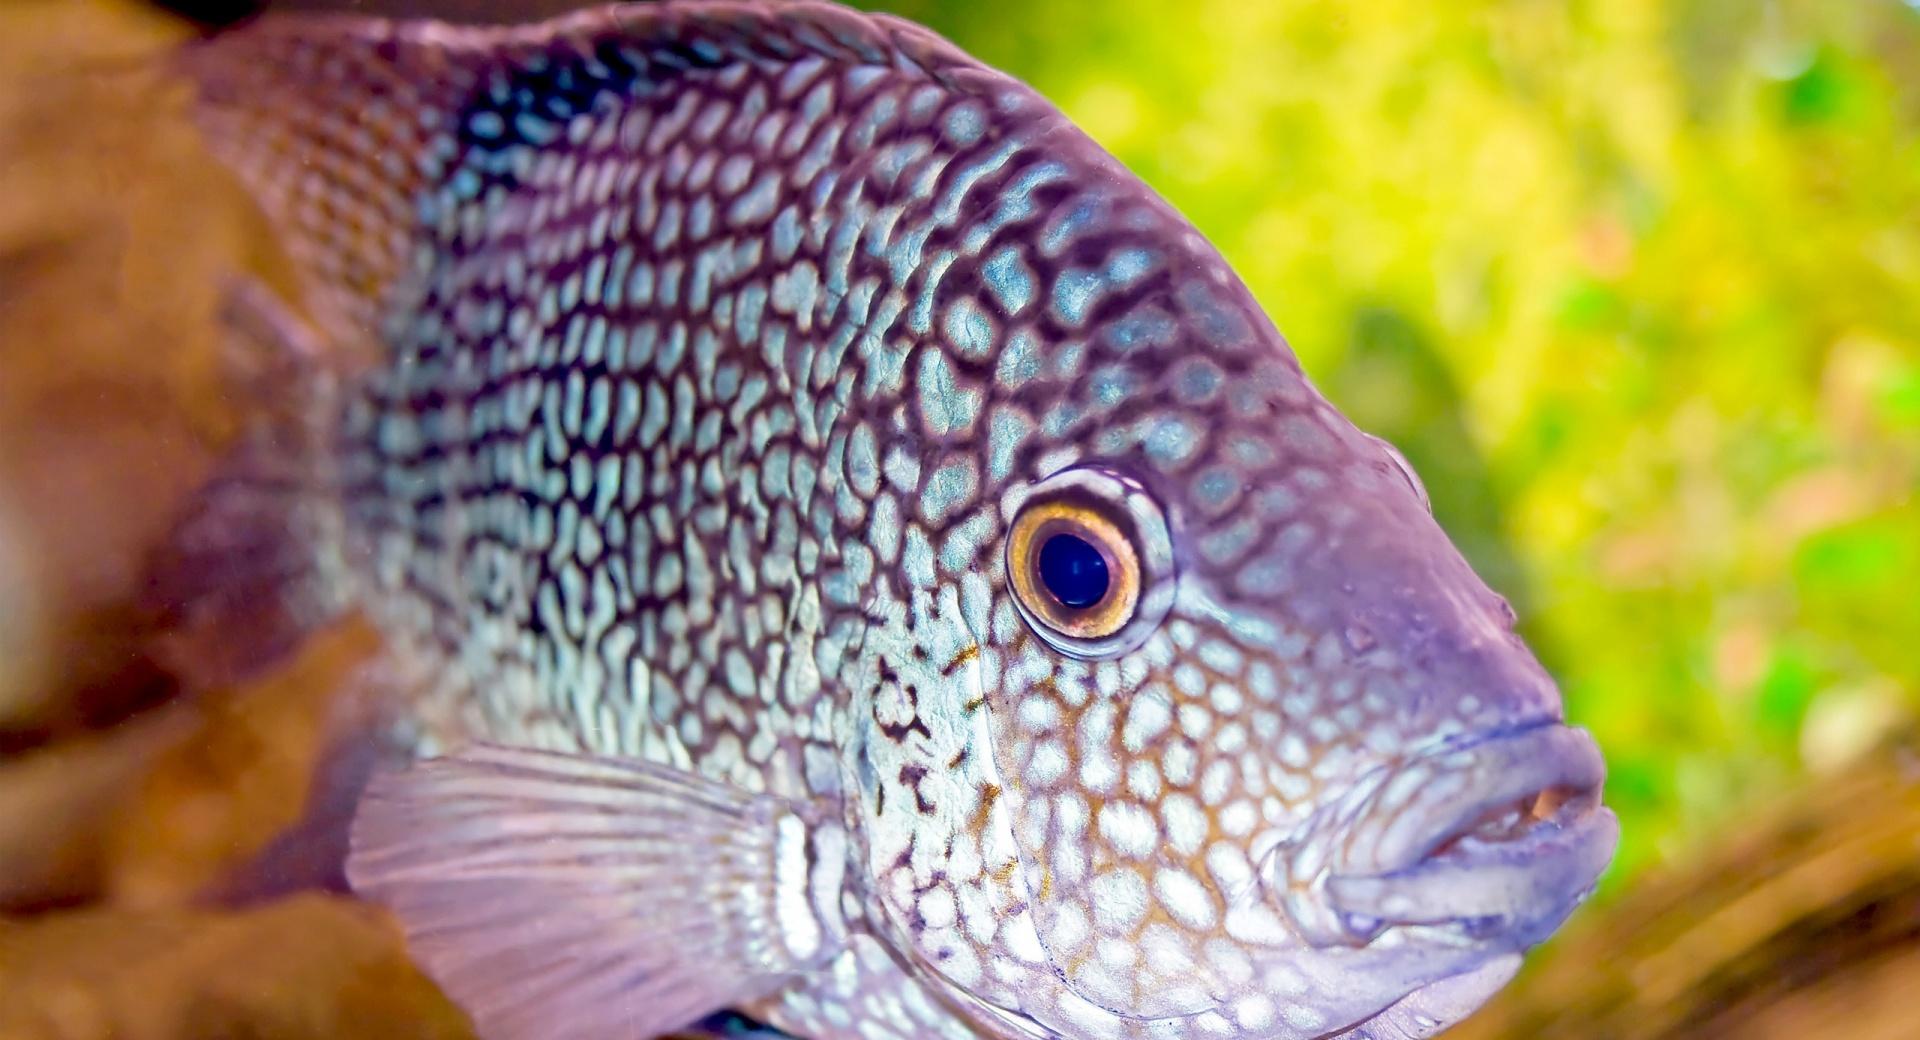 Aquarium Fish at 640 x 1136 iPhone 5 size wallpapers HD quality